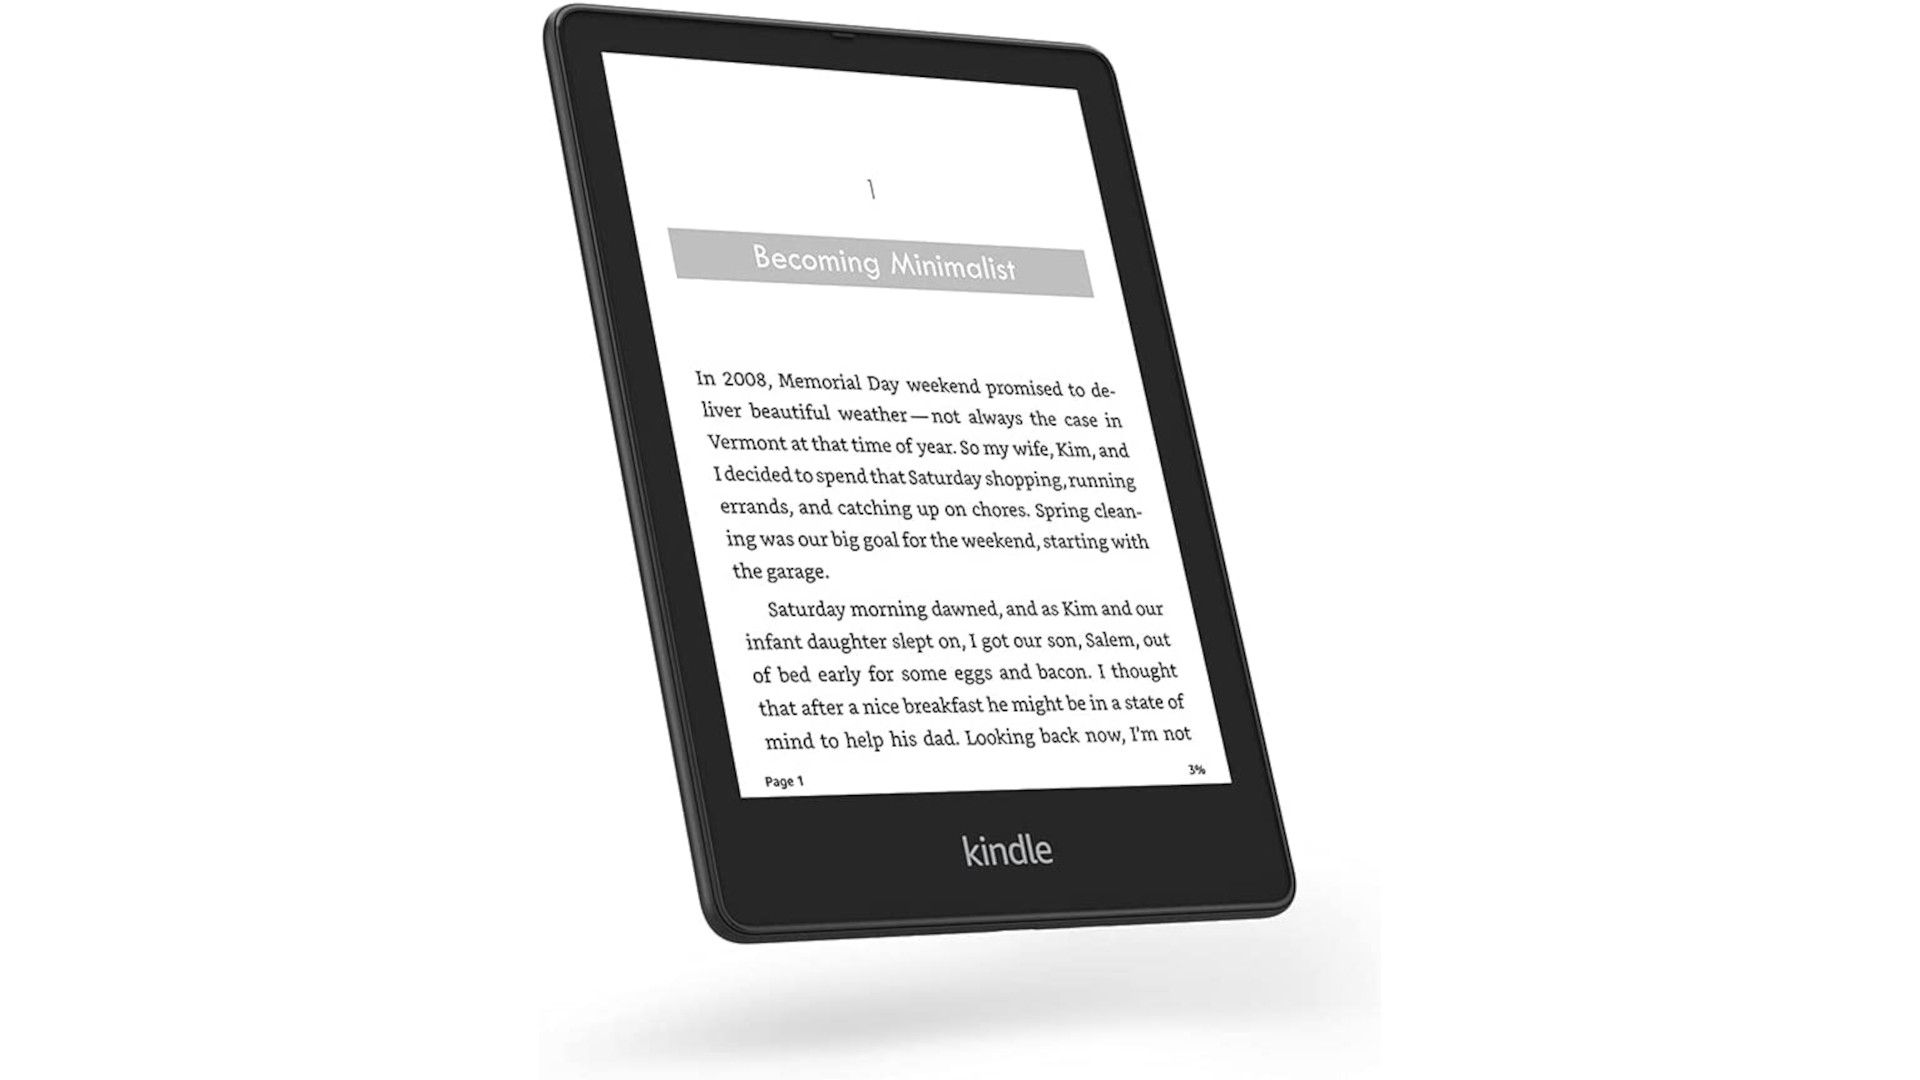 A screenshot shows the Amazon Paperwhite Signature Edition.